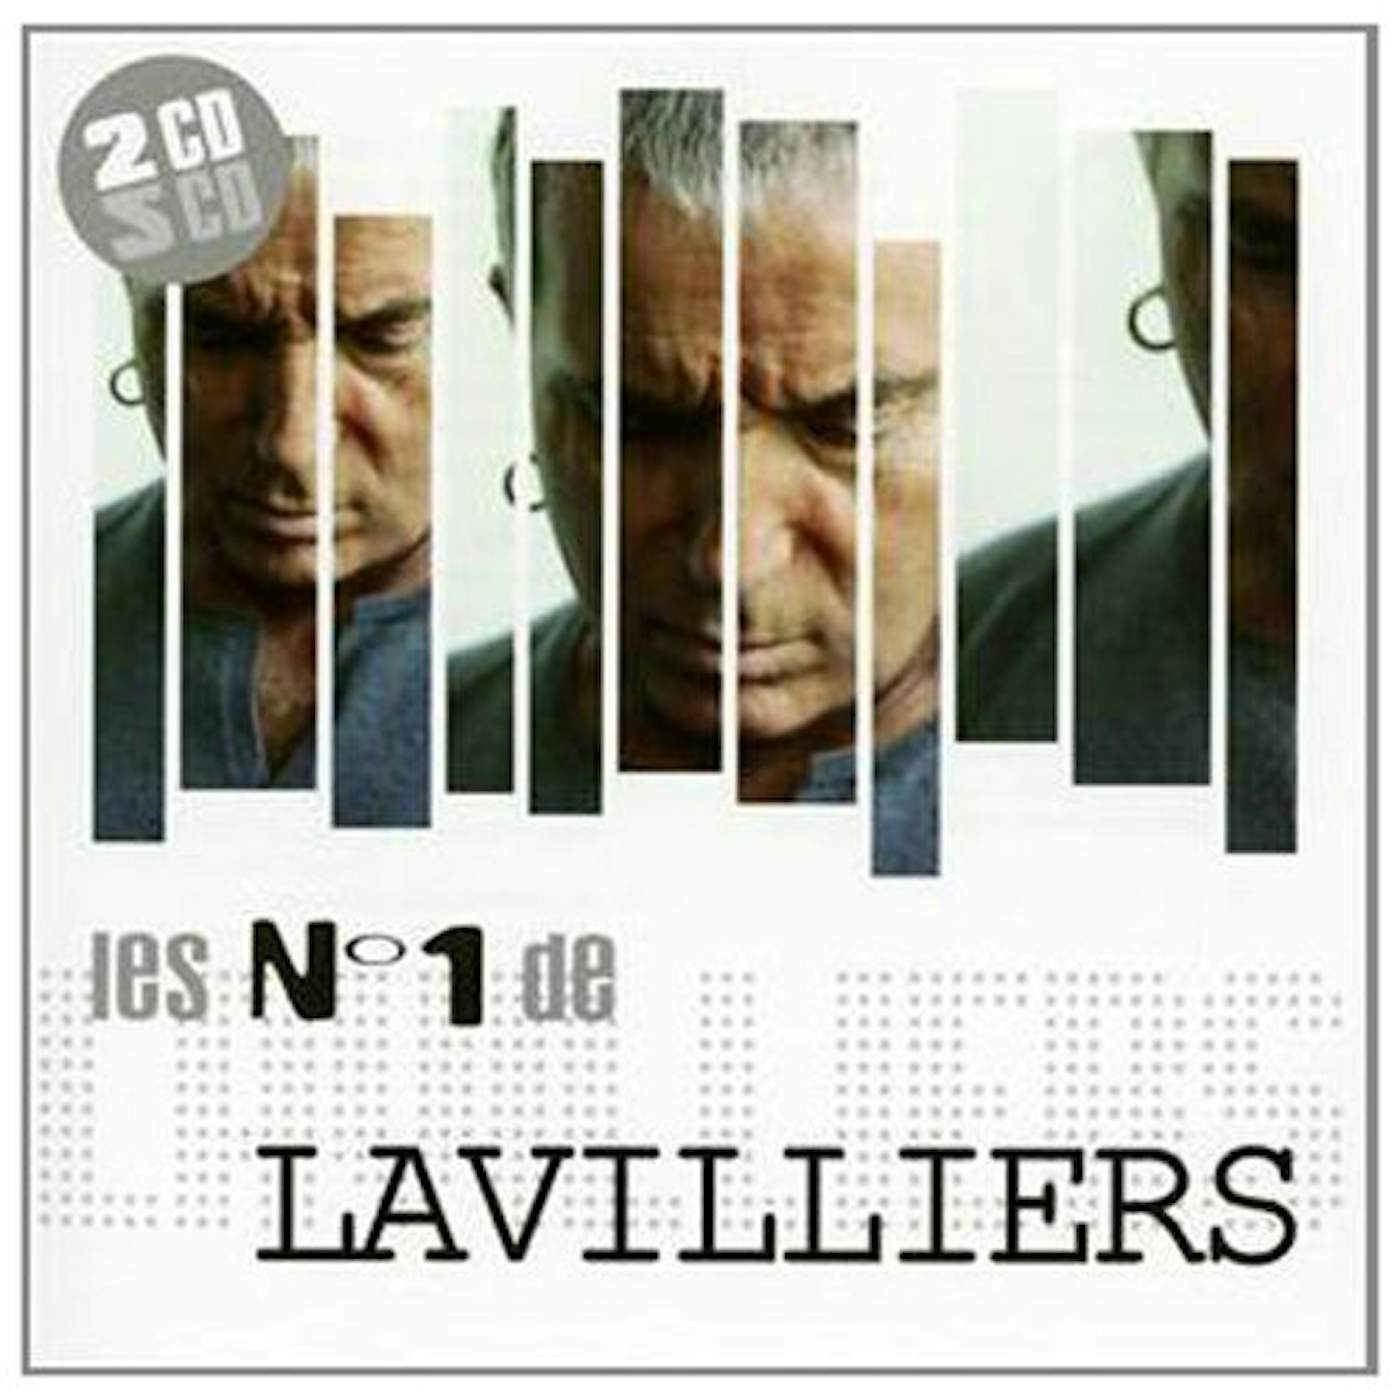 Bernard Lavilliers LES NUMEROS 1 CD